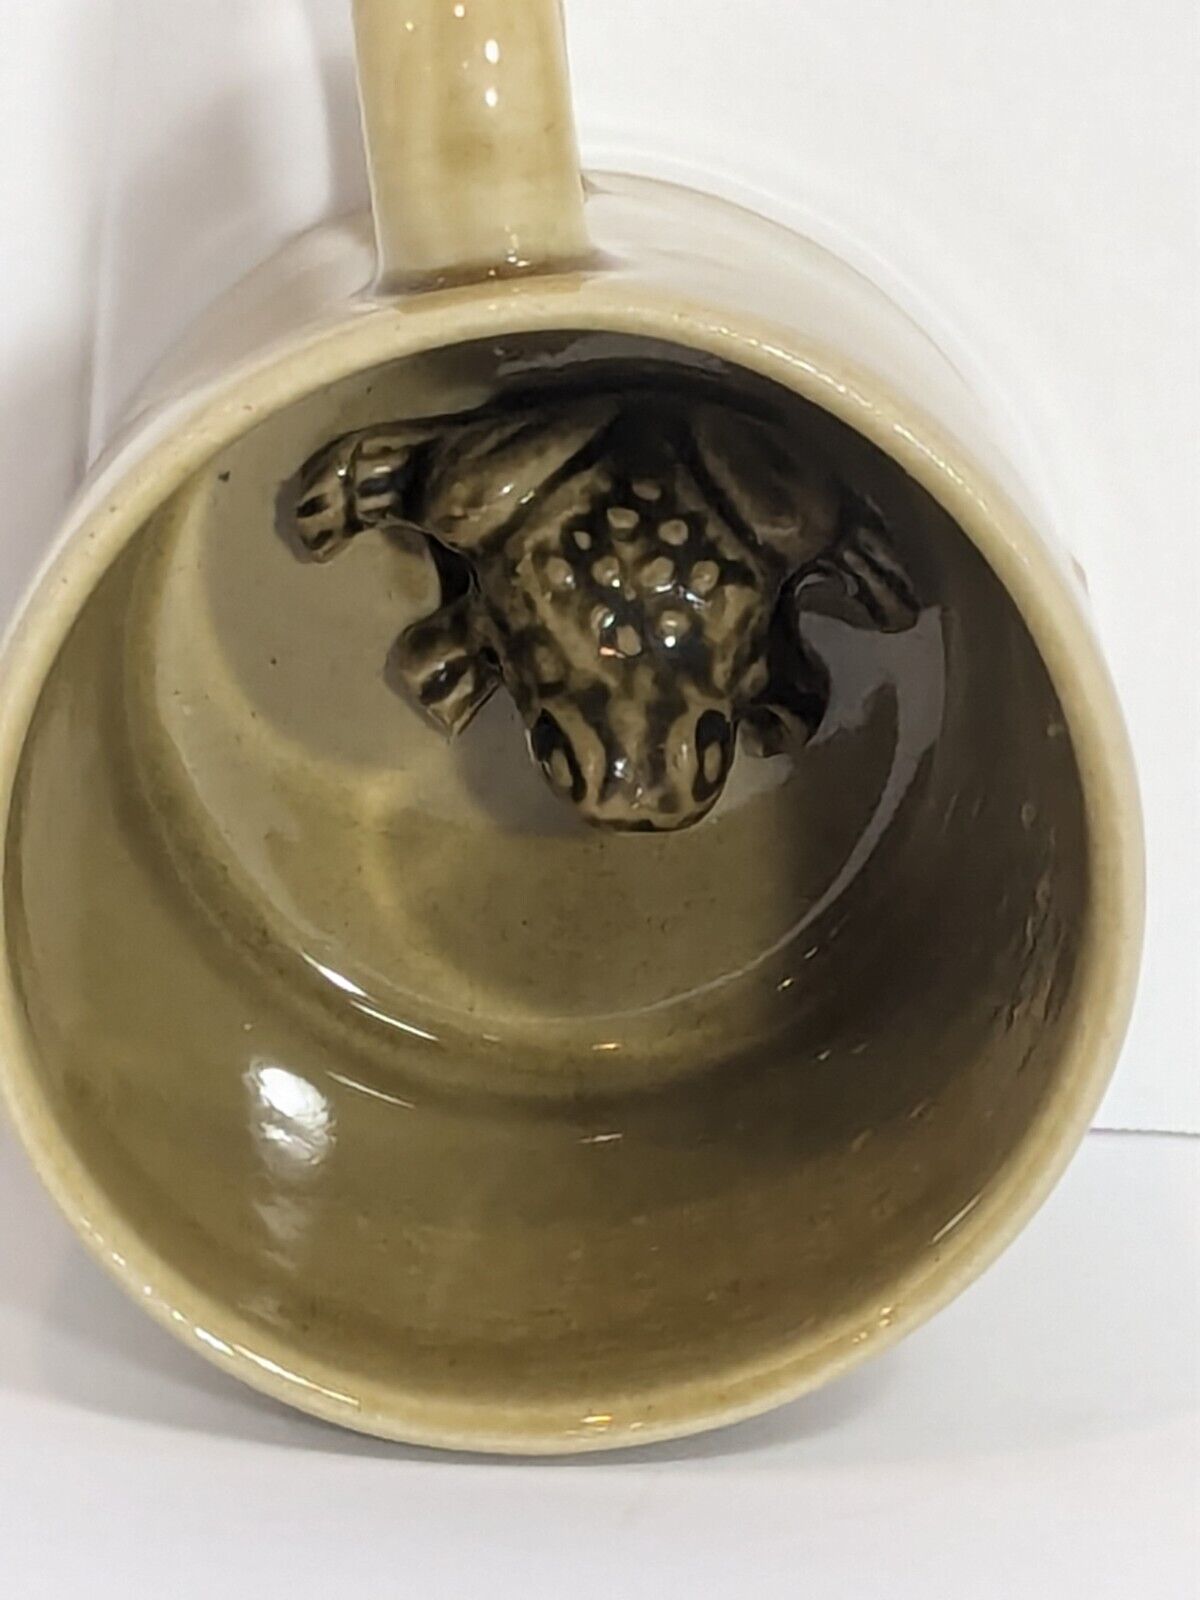 Surprise/Hidden Frog Mug Bennington Potters Vermont David Gil Design 1977